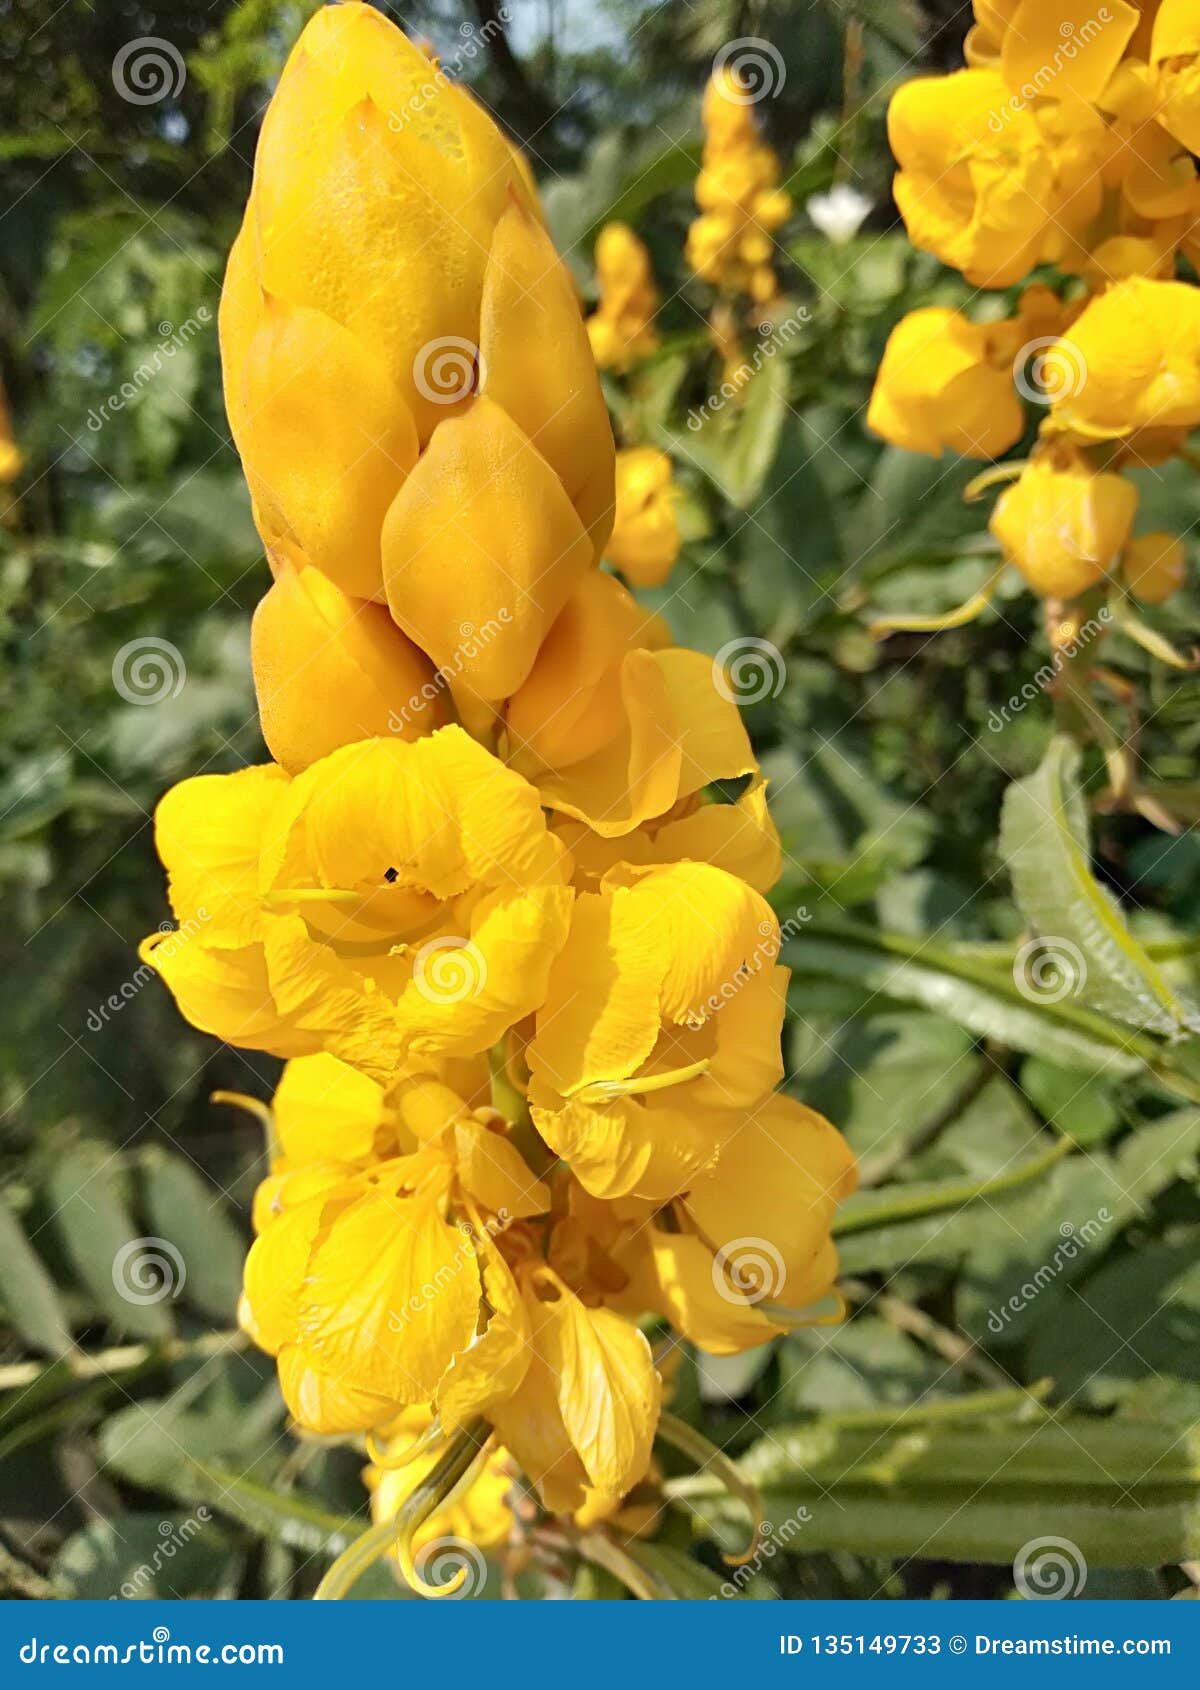 yellow flower in my garden tree it is the best flower in india stock